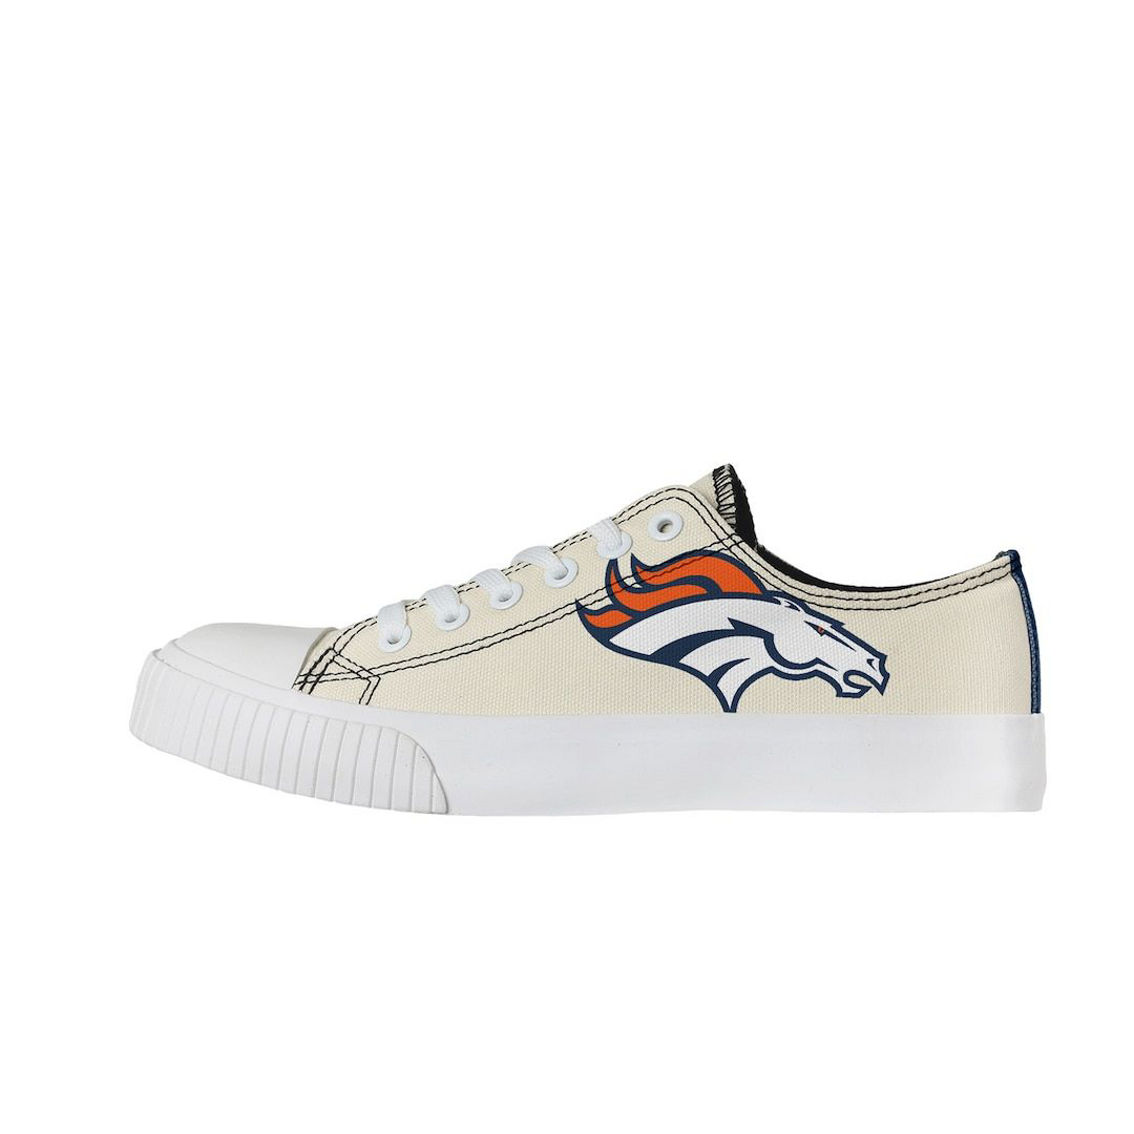 FOCO Women's Cream Denver Broncos Low Top Canvas Shoes - Image 2 of 4